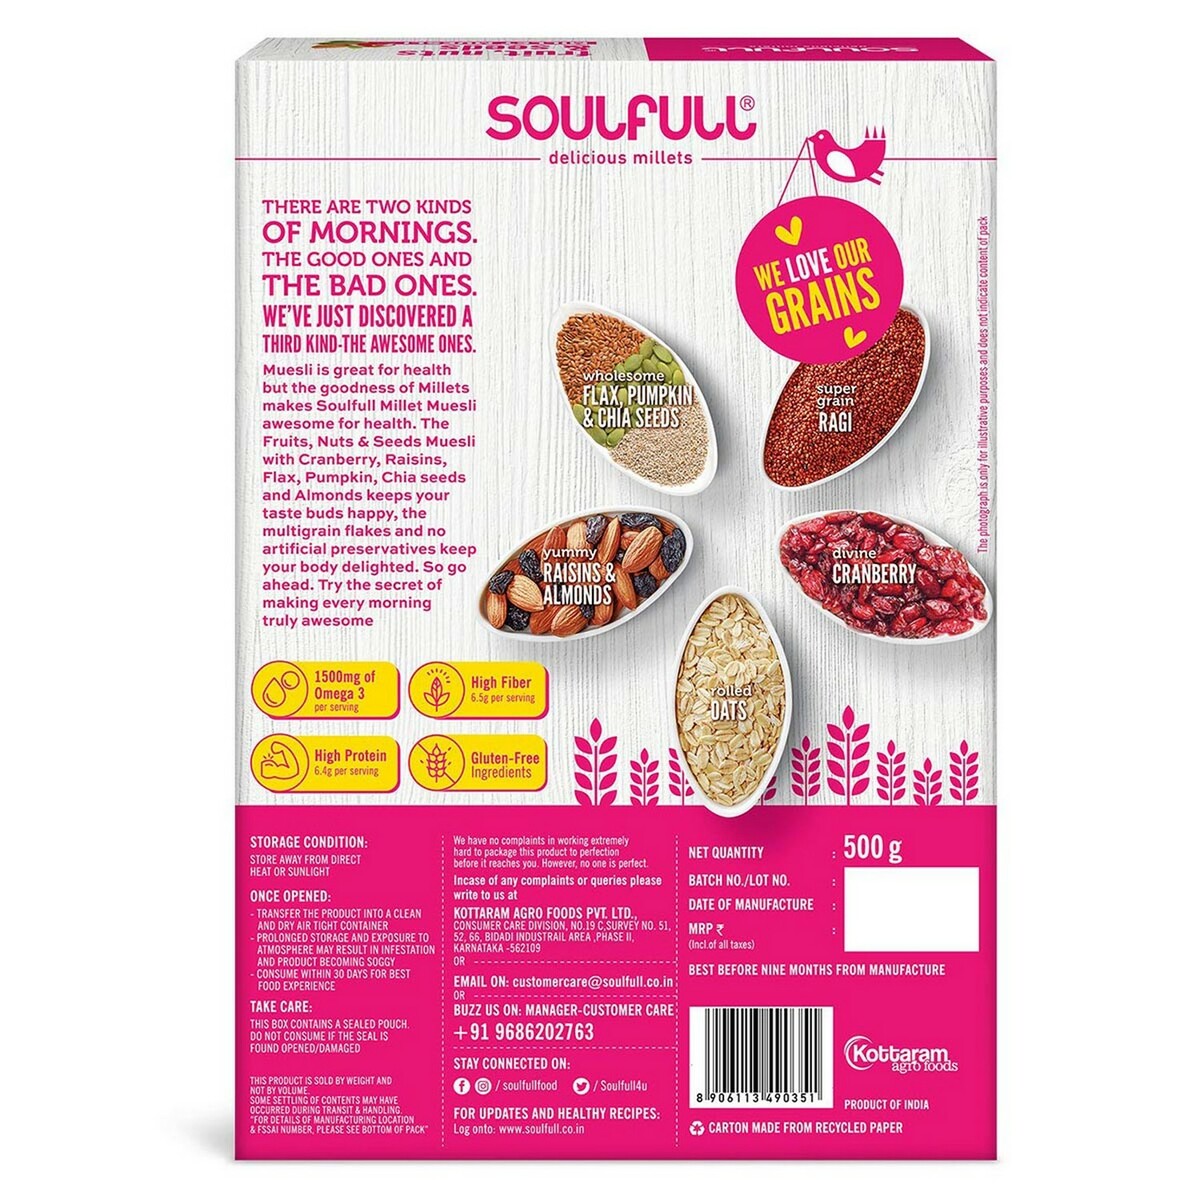 Soulfull Millet Muesli Fruit Nut & Seeds 500g